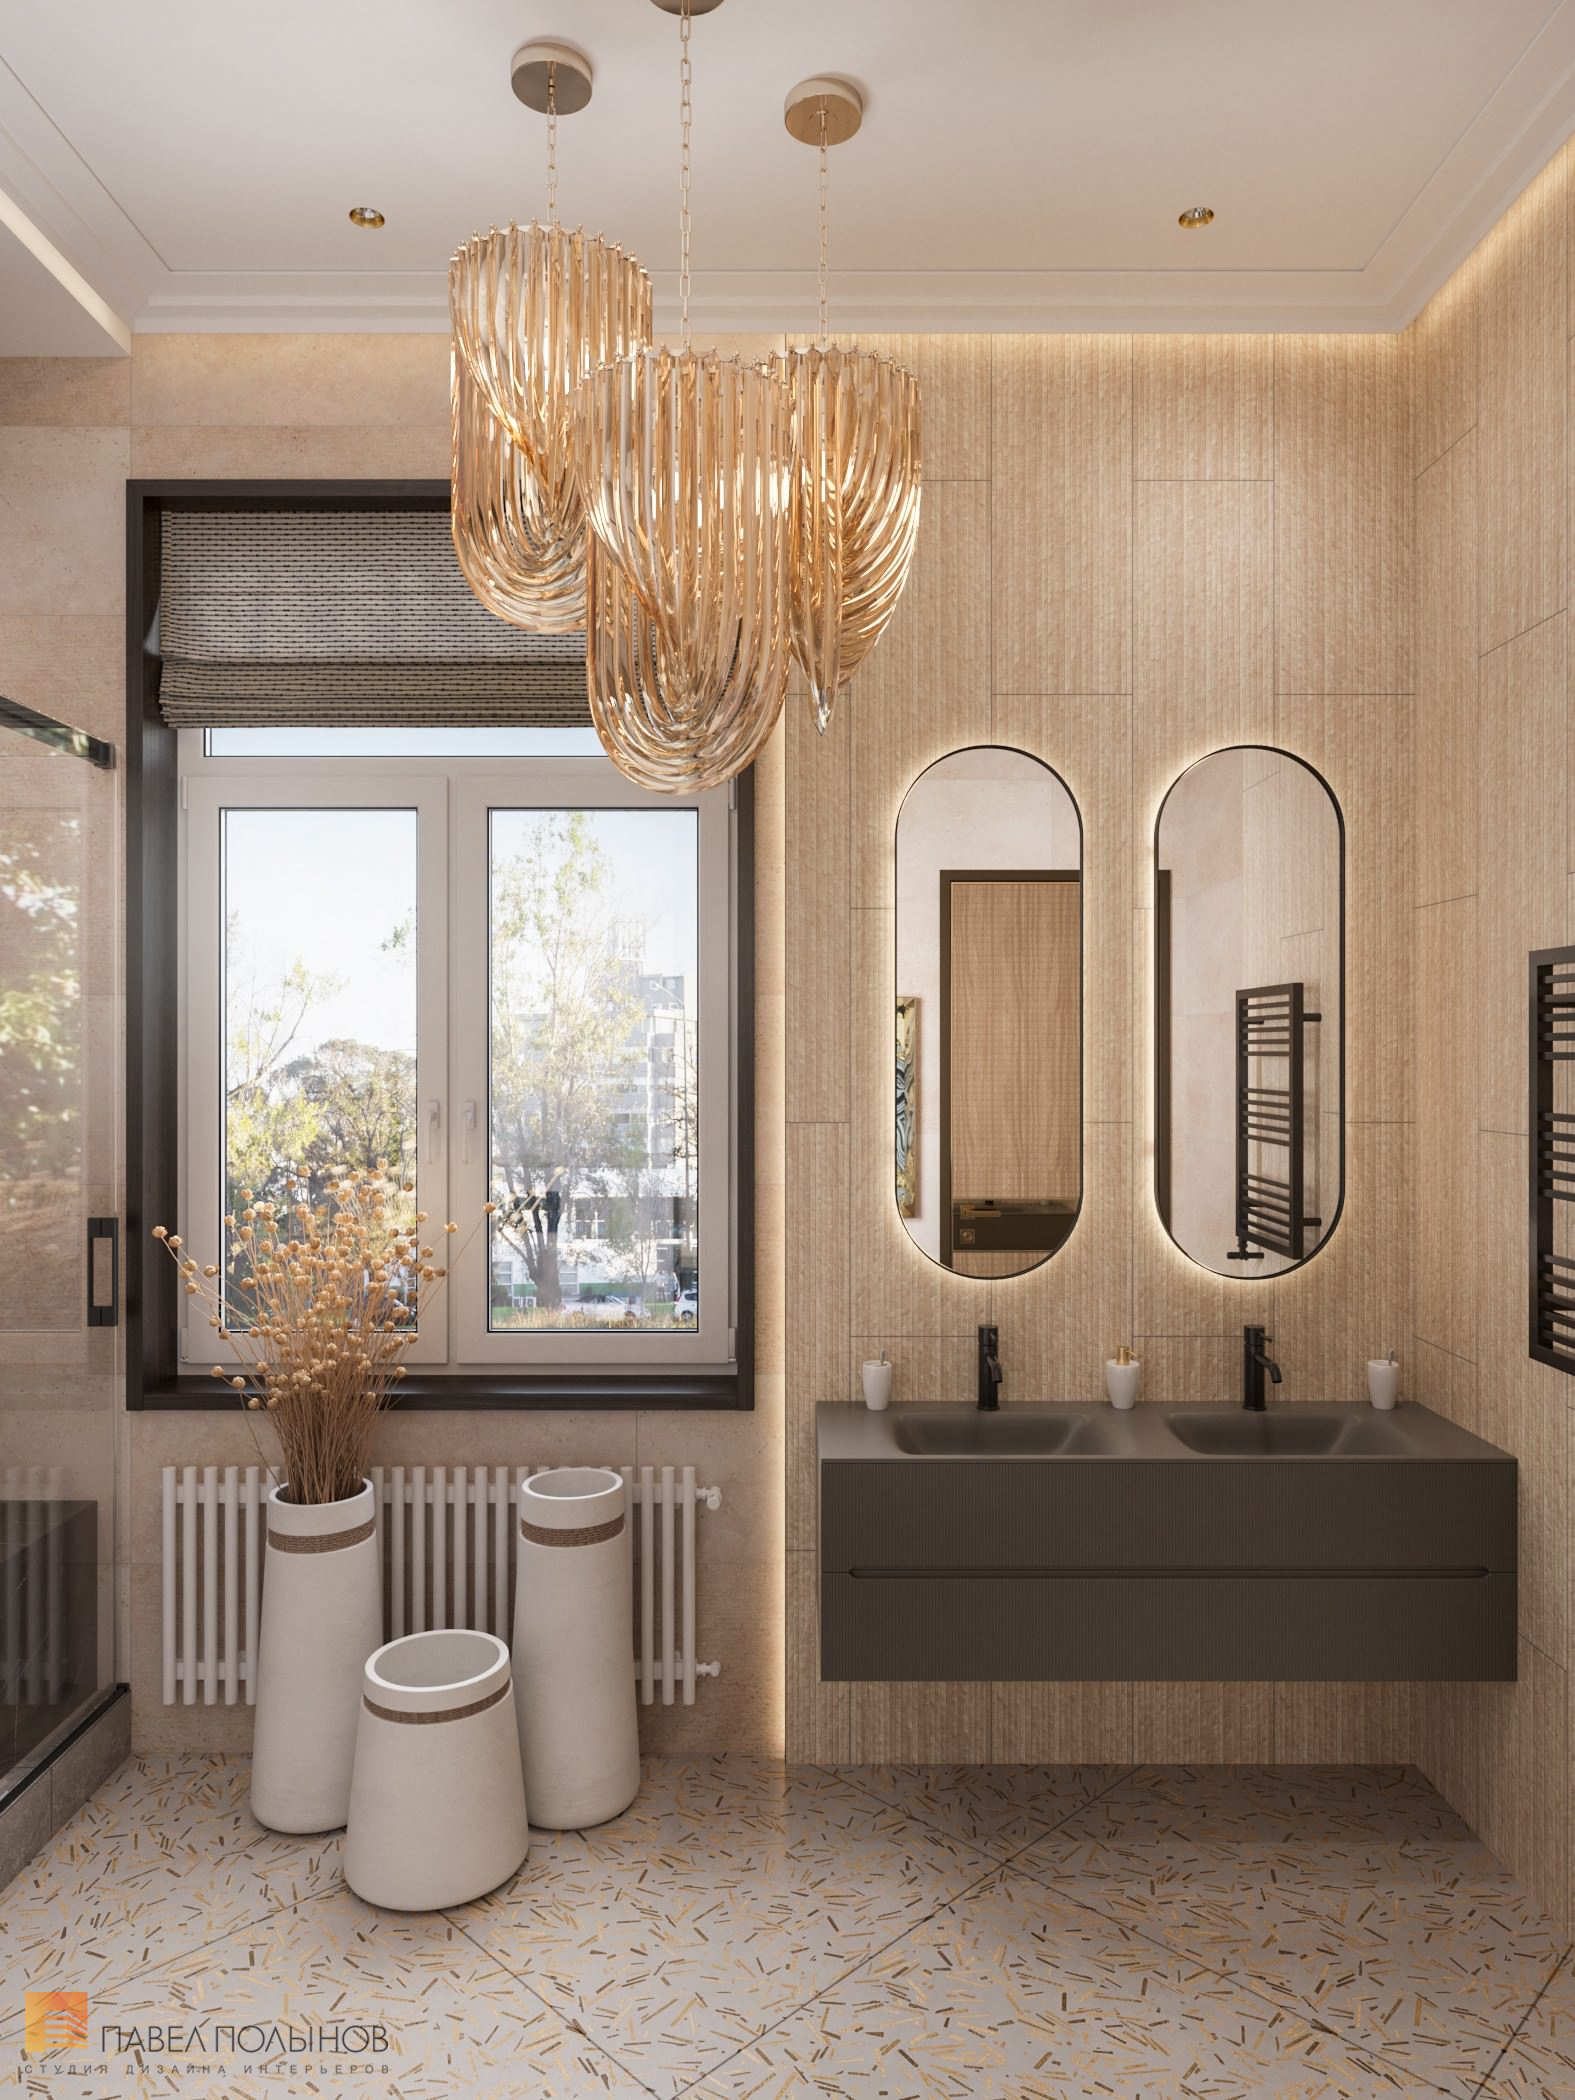 Фото интерьер душевой комнаты из проекта «Дизайн интерьера квартиры в стиле Ар-деко, 100 кв.м.»